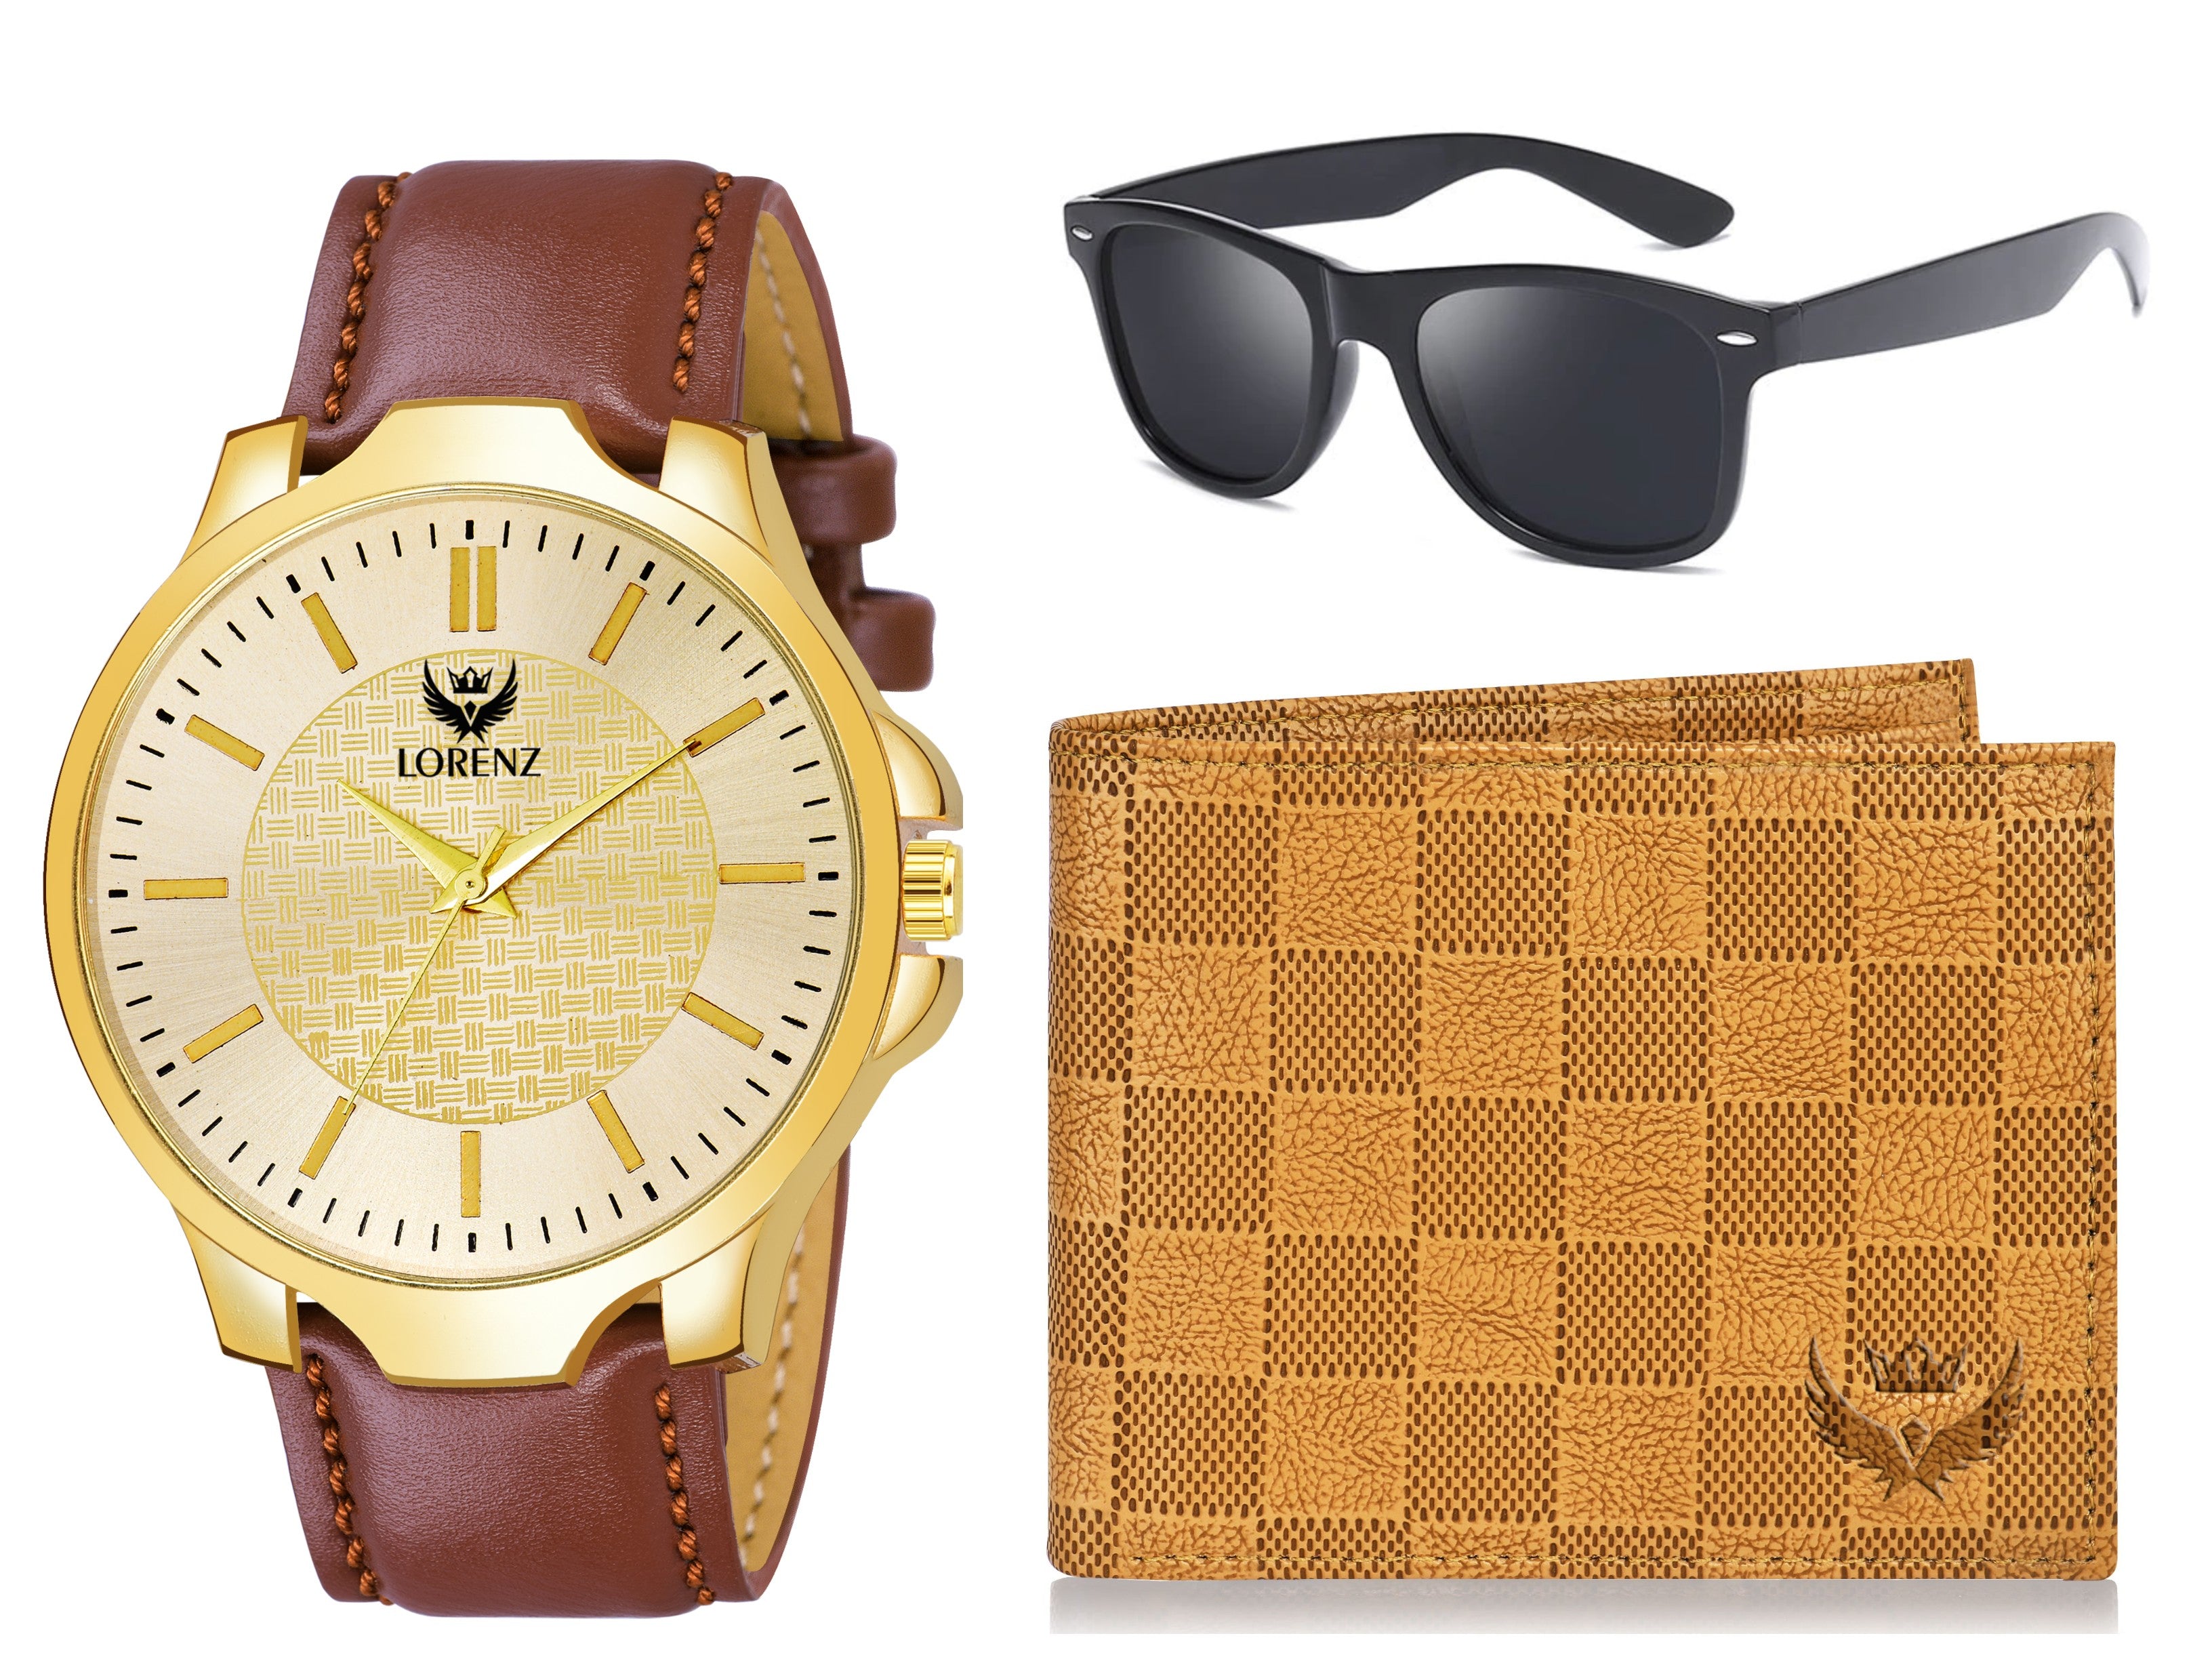 Lorenz Men's Gold Watch, Brown Leather Wallet & Wayfarer Sunglasses Gift Set